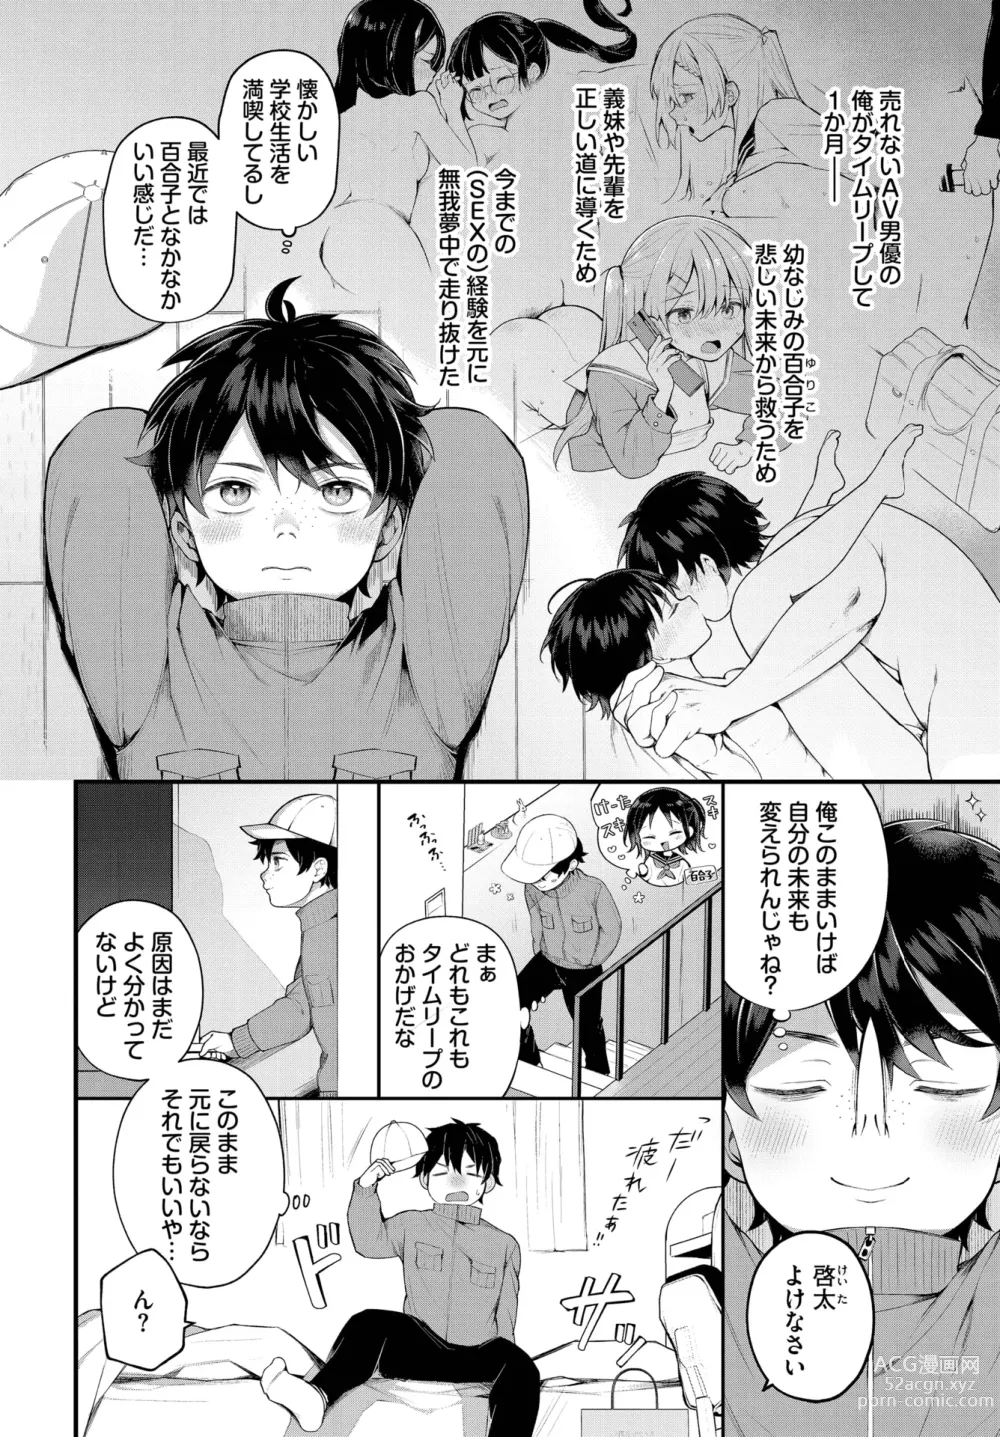 Page 5 of manga Dascomi Vol.29